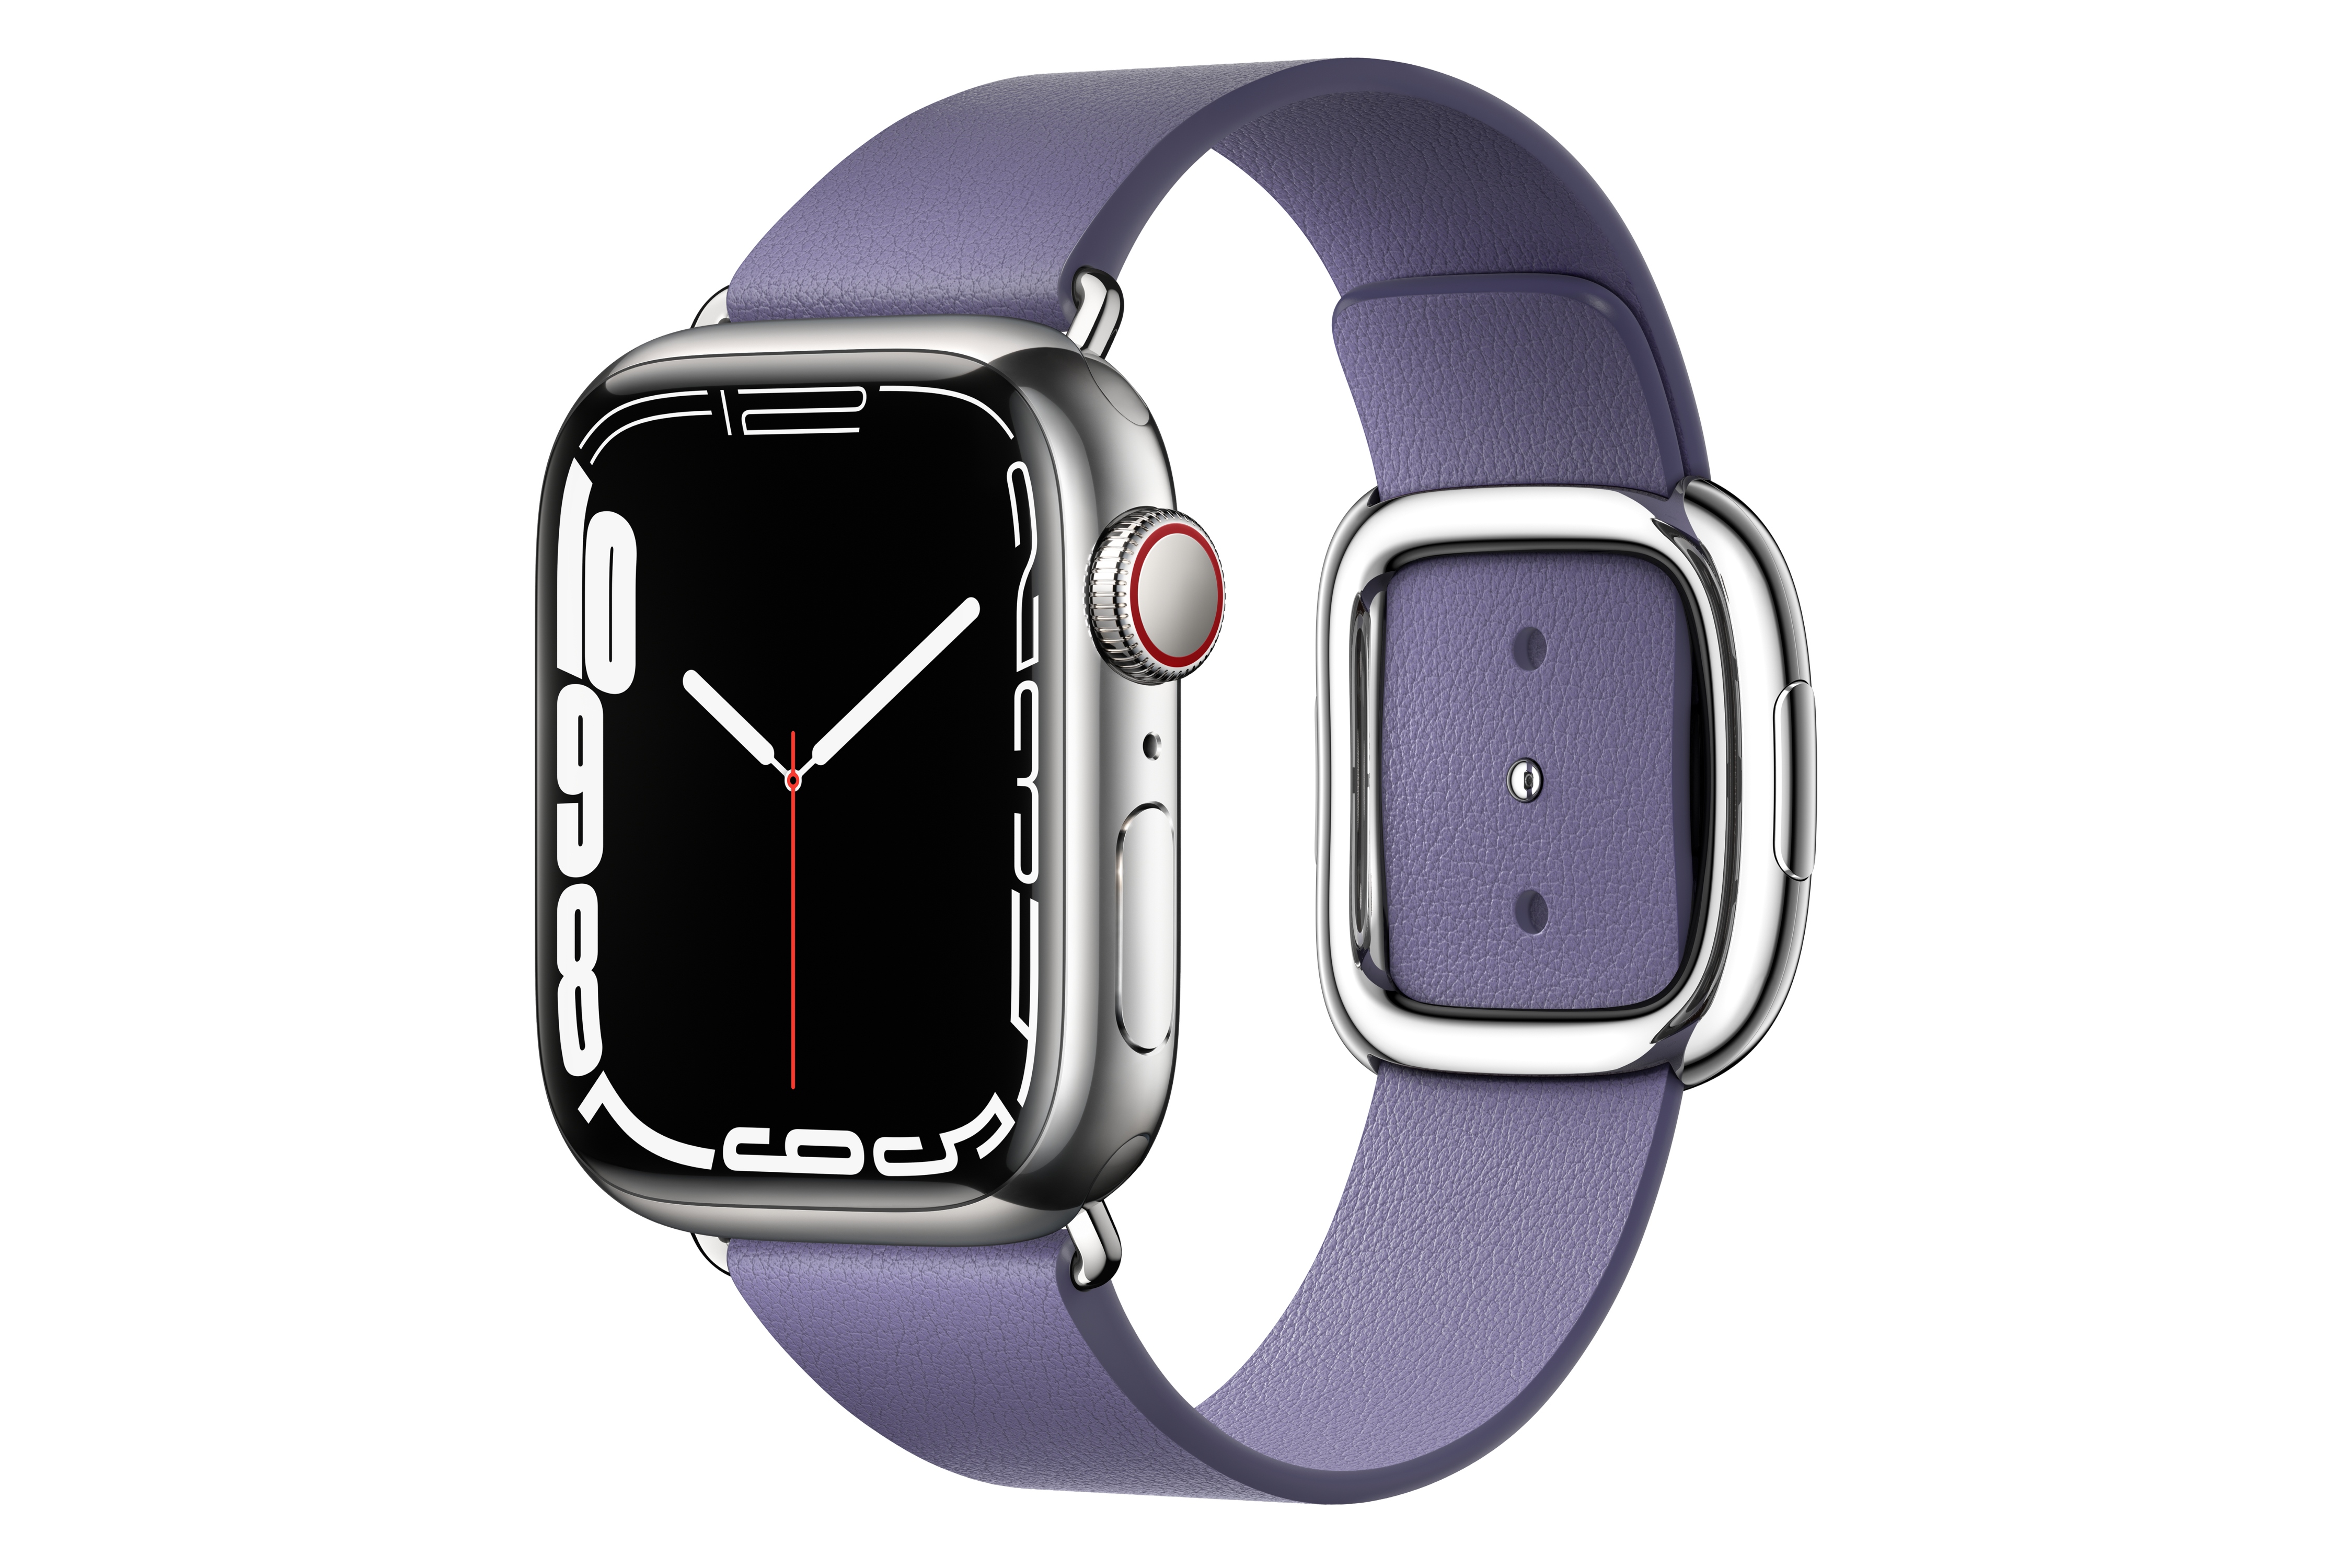 اپل واچ سری 7 استیل / Apple Watch Series 7 Stainless Steel نقره ای